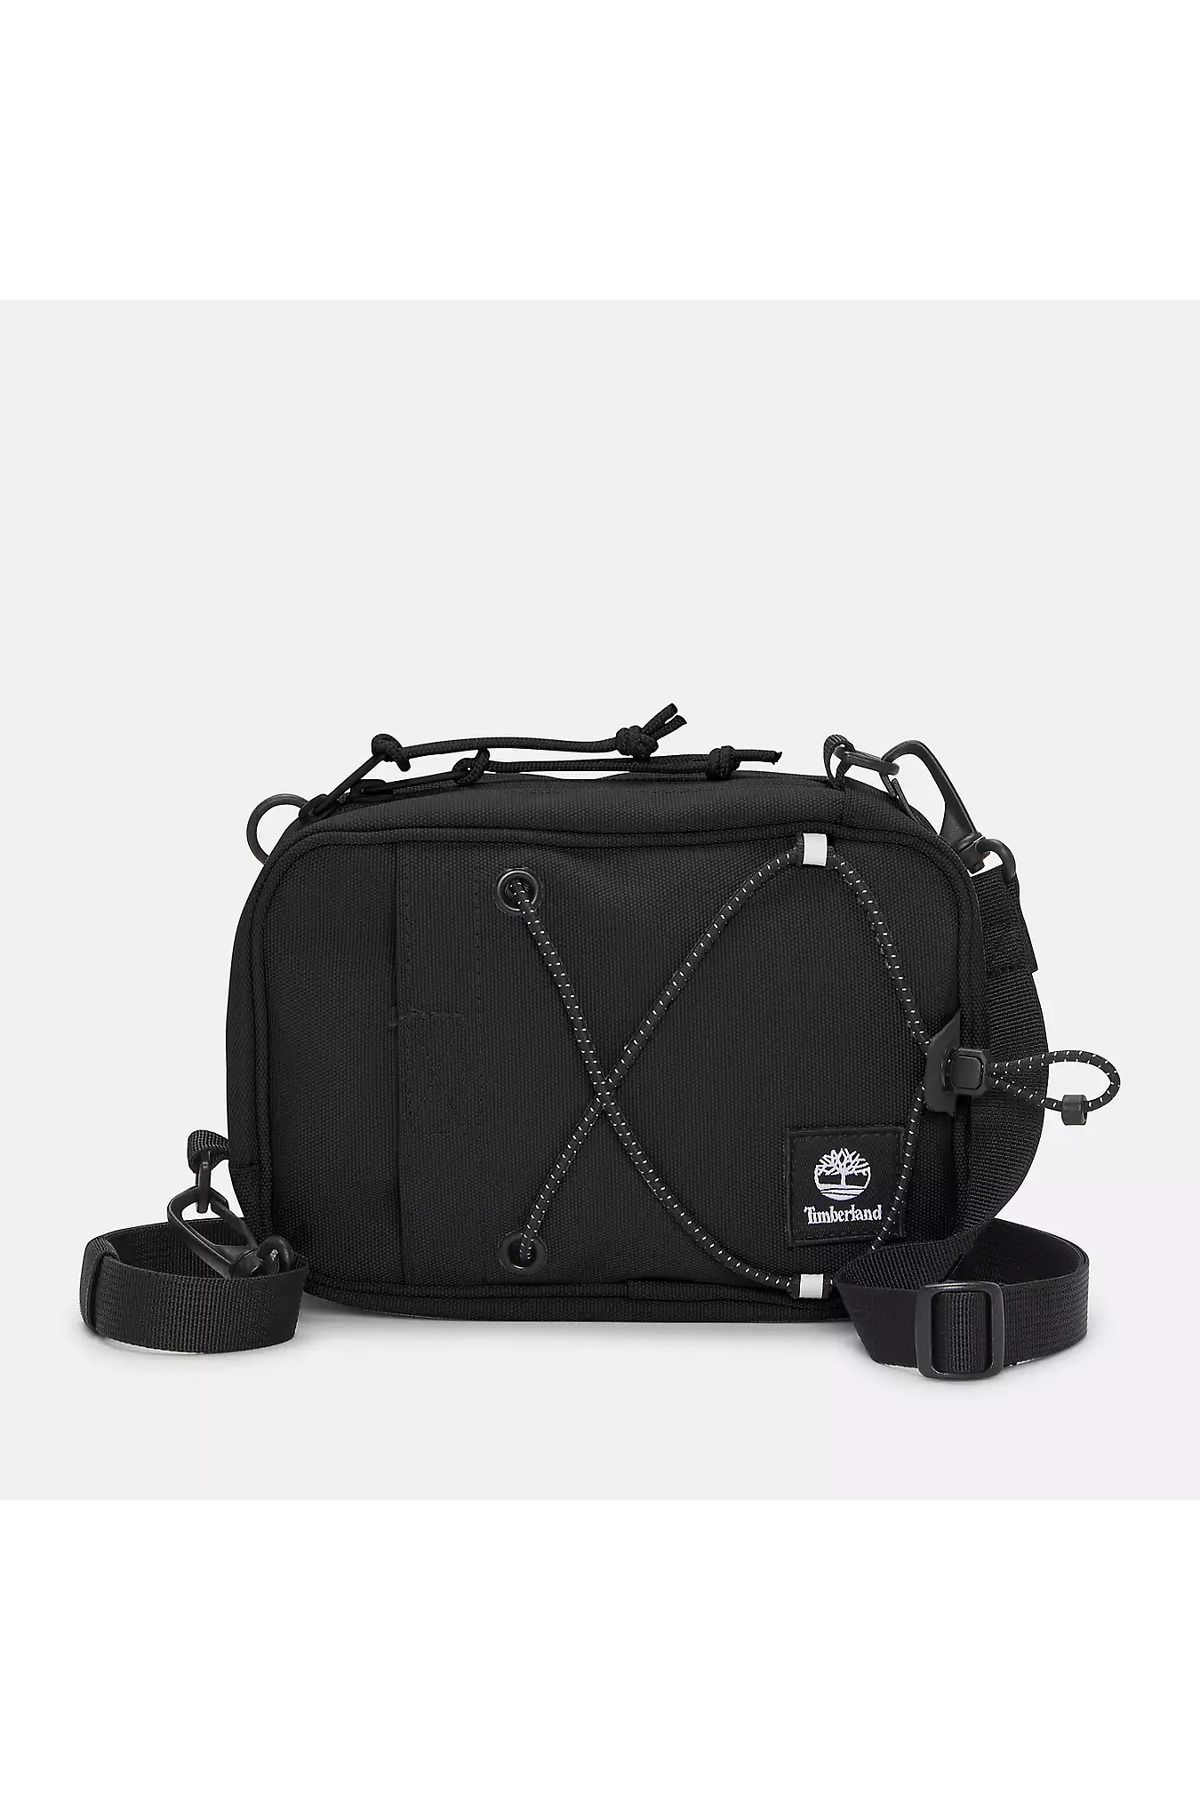 Timberland Cross Body Bag Unısex Siyah Omuz Çantası Tb0a5ssy0011